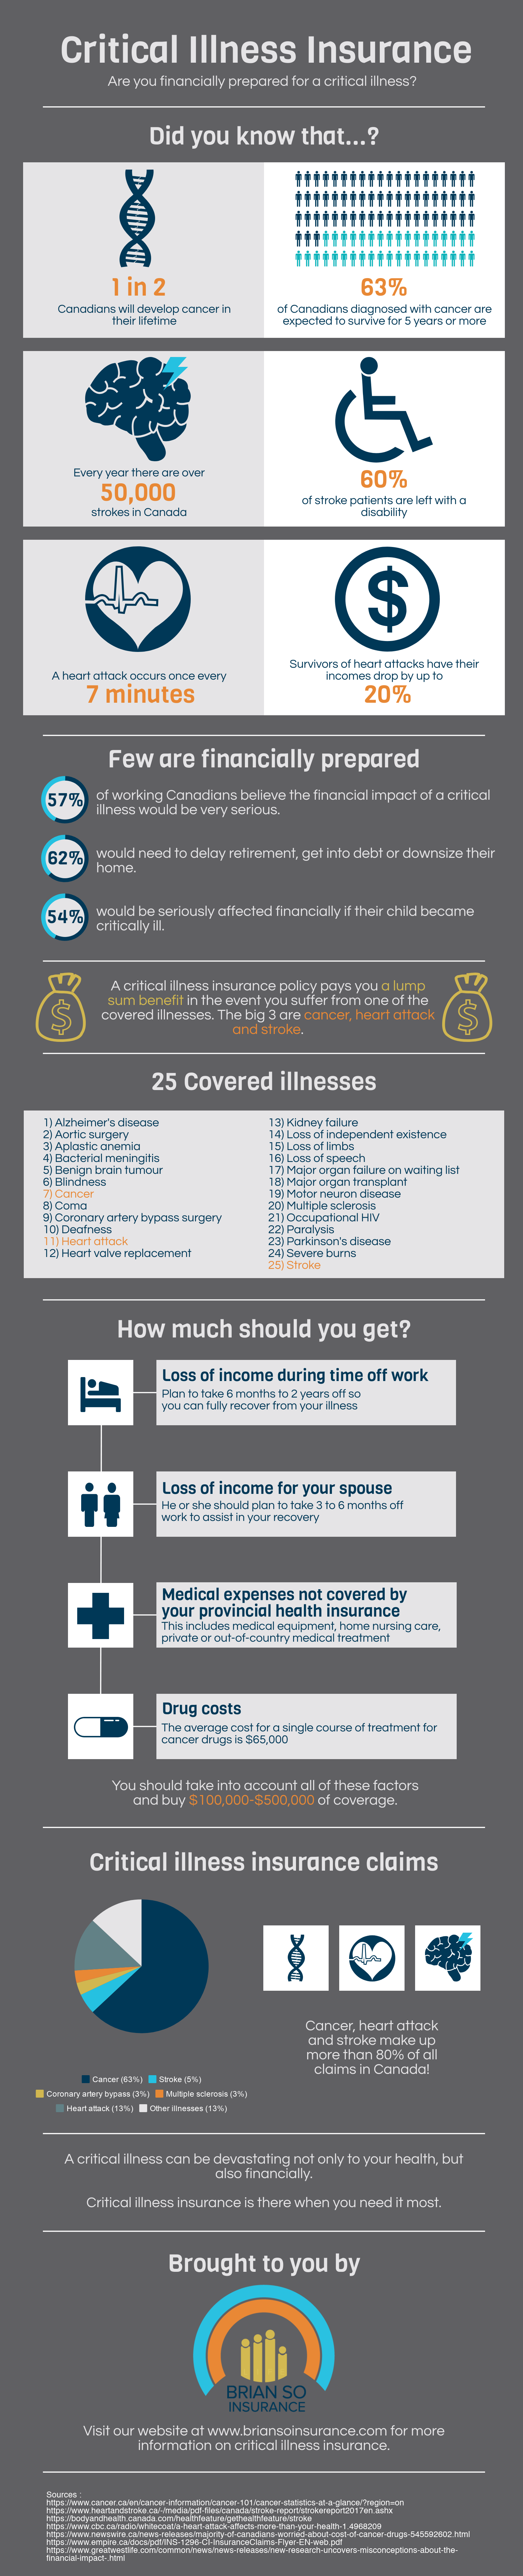 critical illness insurance infographic